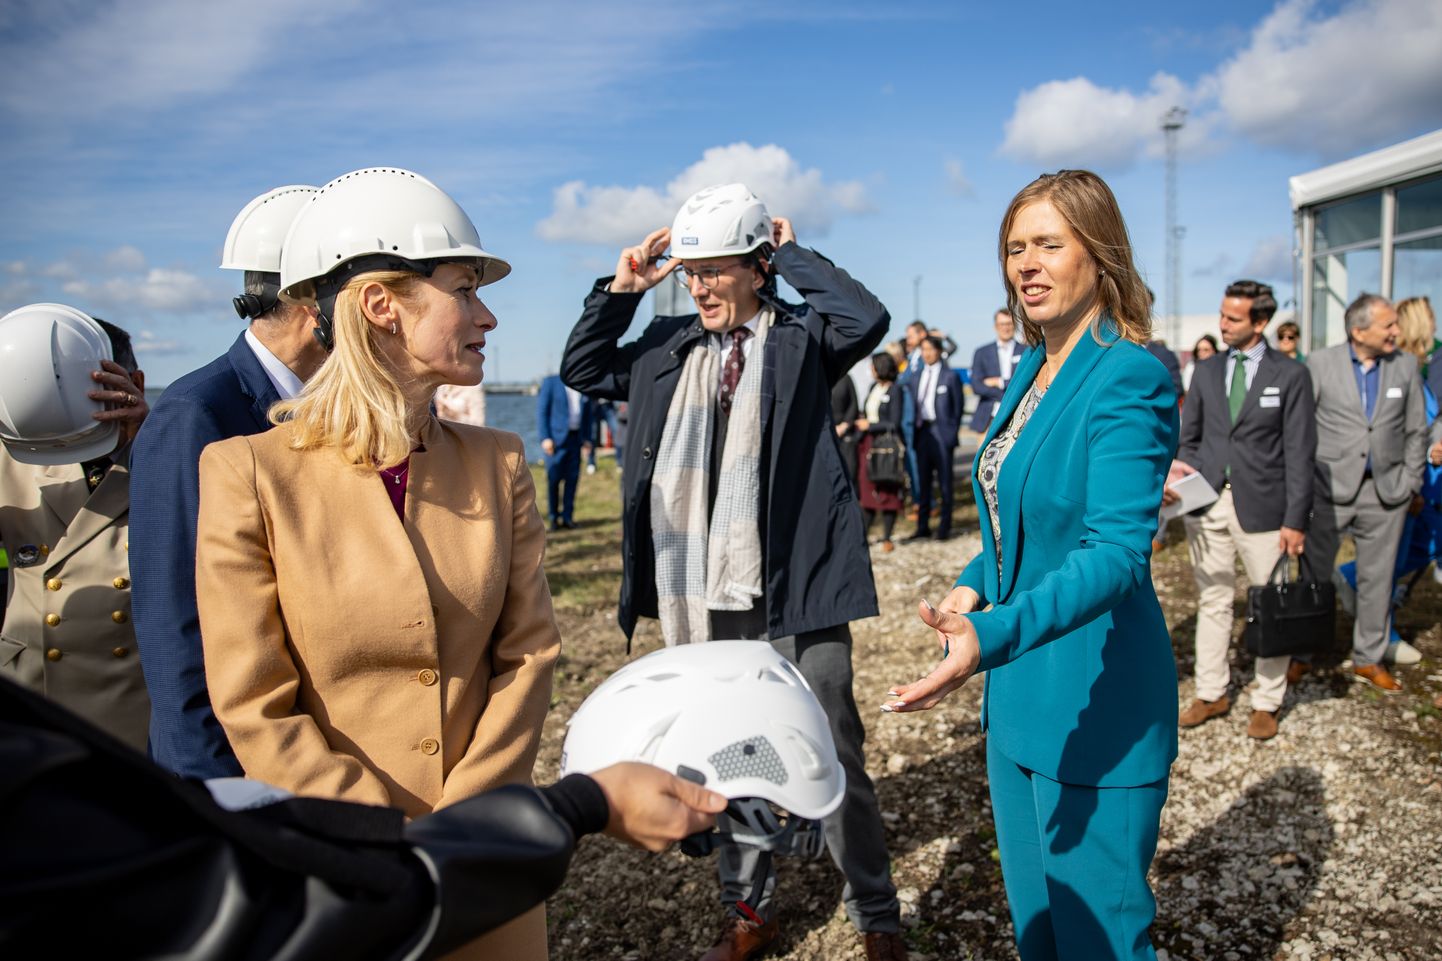 Of Estonian politicians, the list includes Prime Minister Kaja Kallas (left), former president Kersti Kaljulaid (right).